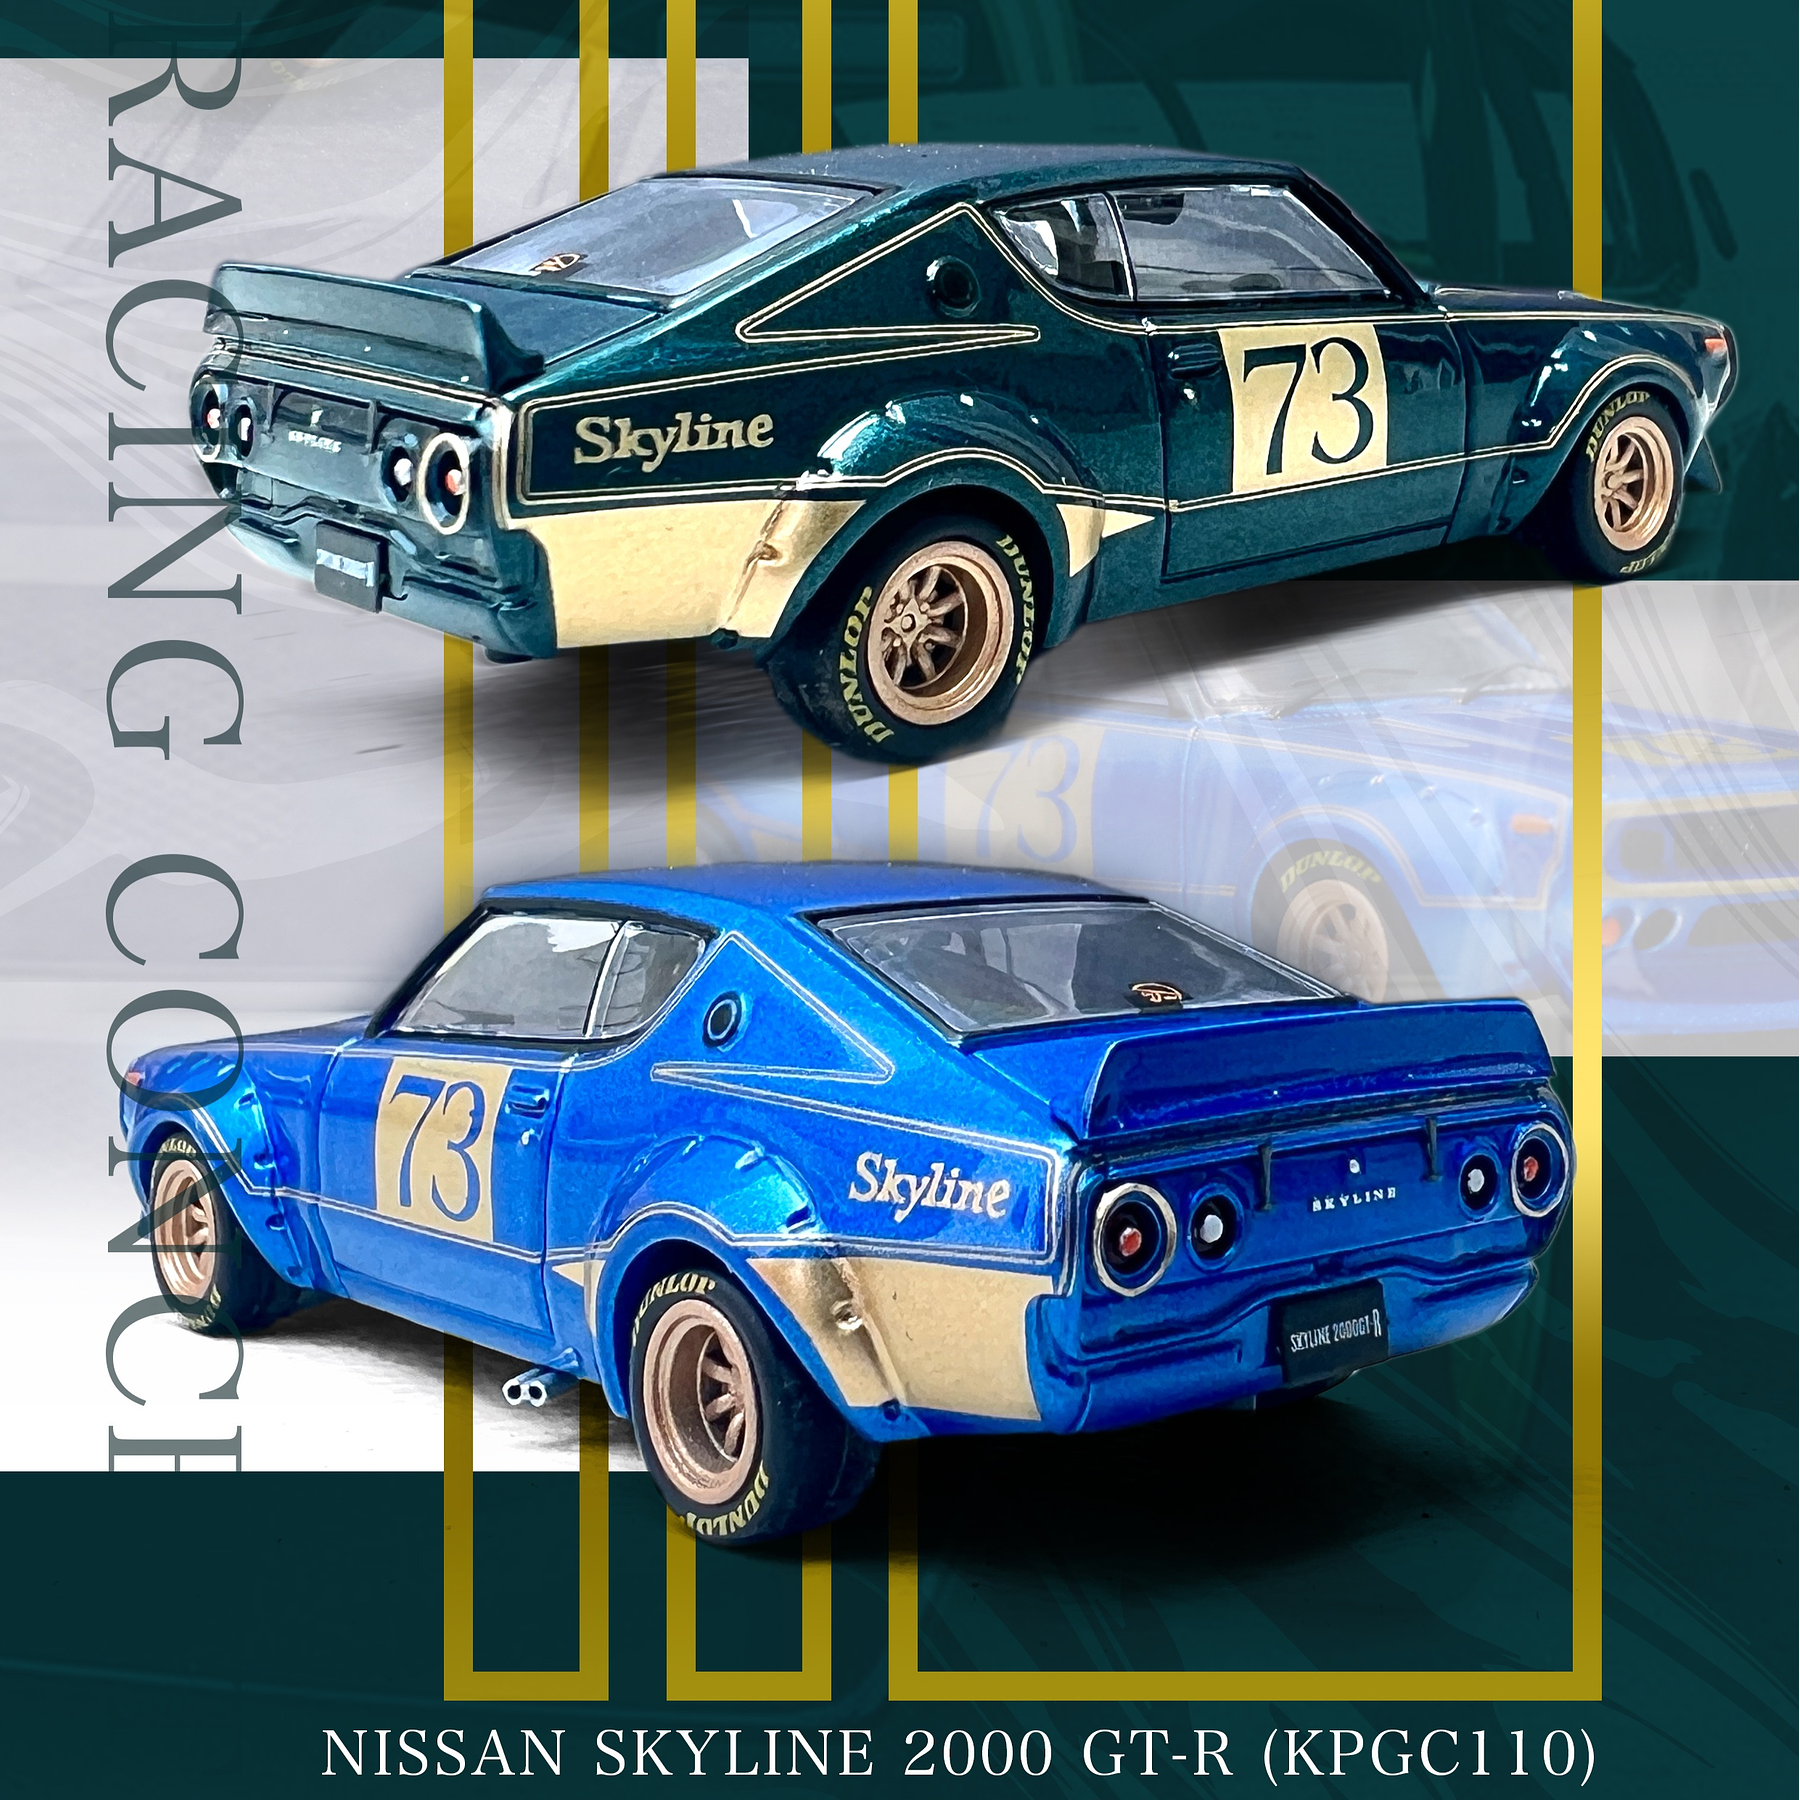 PREVENTA Inno64 1:64 Nissan Skyline 2000 GT-R (KPGC110) Racing Concept Green